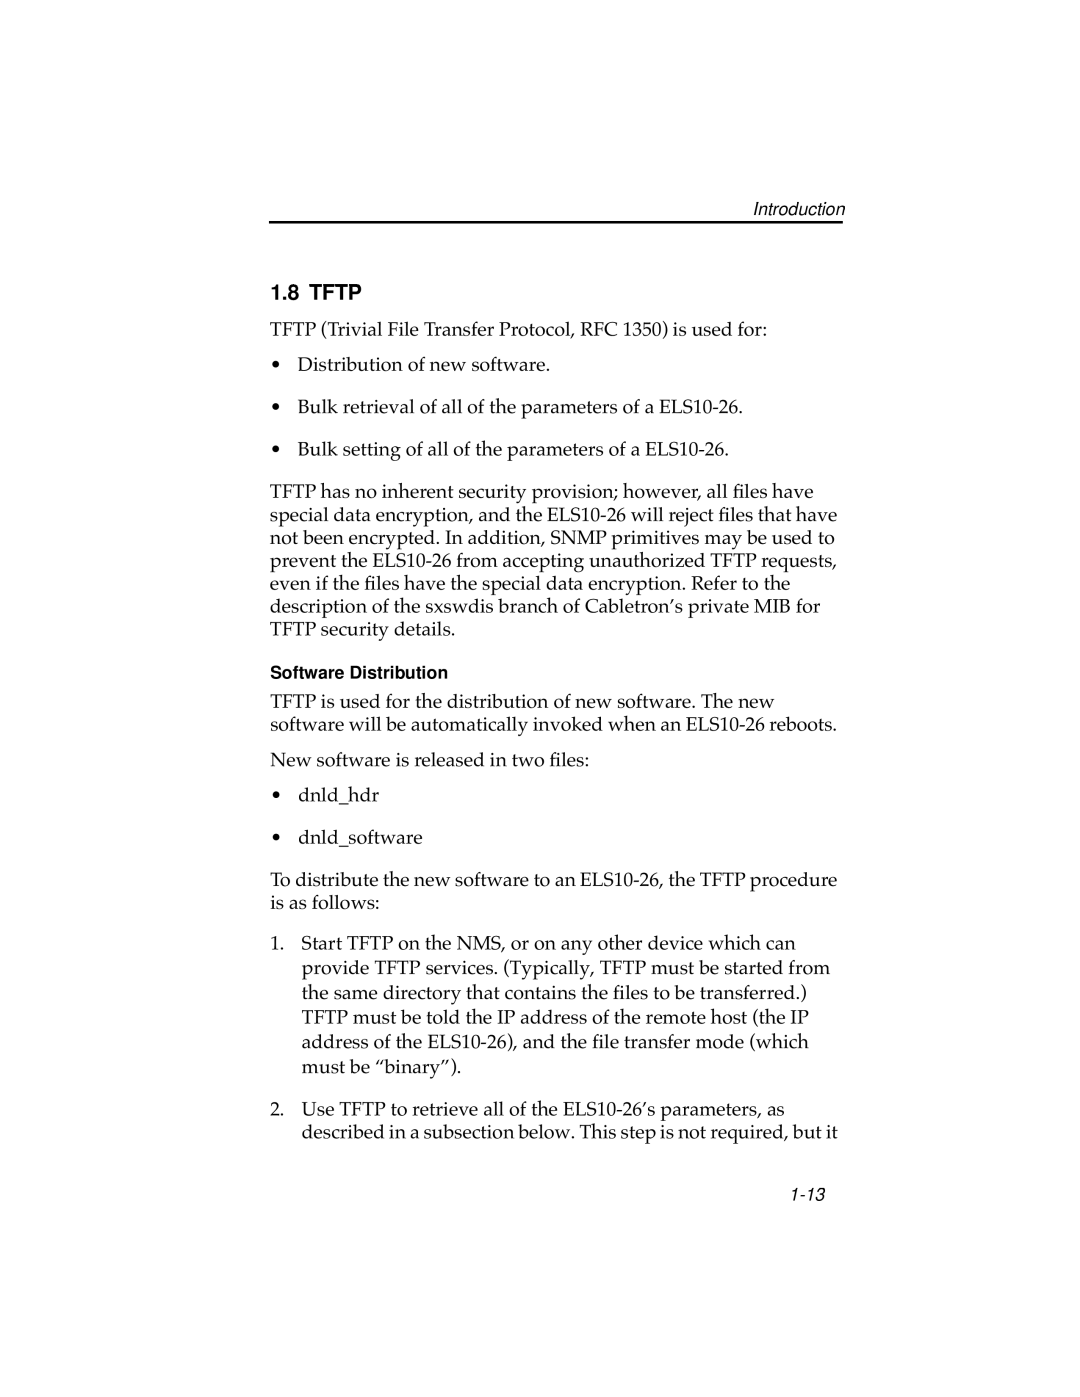 Cabletron Systems ELS10-26 manual Tftp 